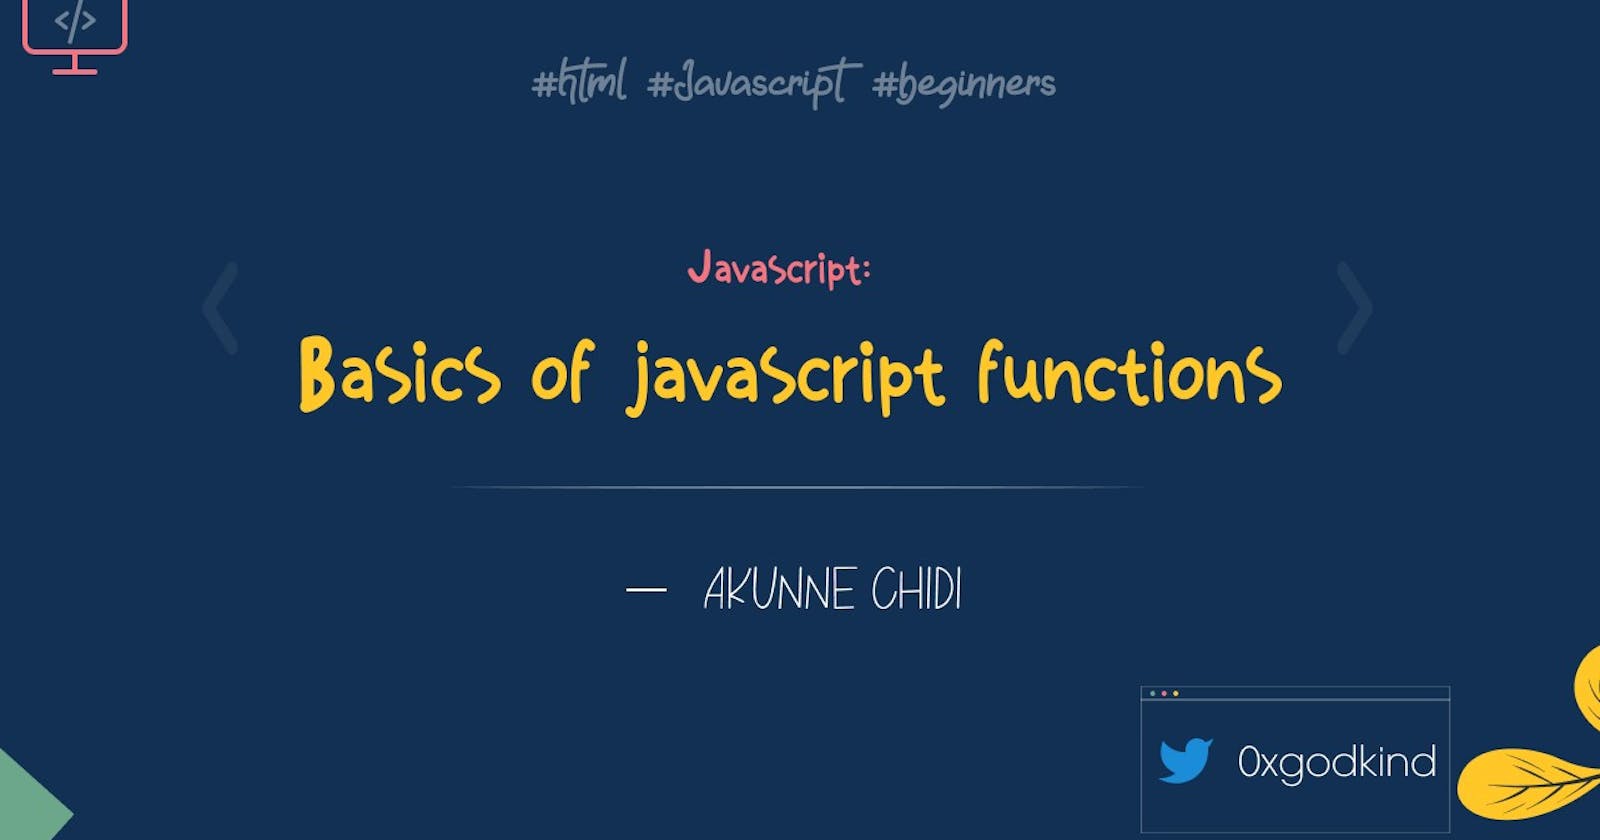 The Basics of JavaScript Functions